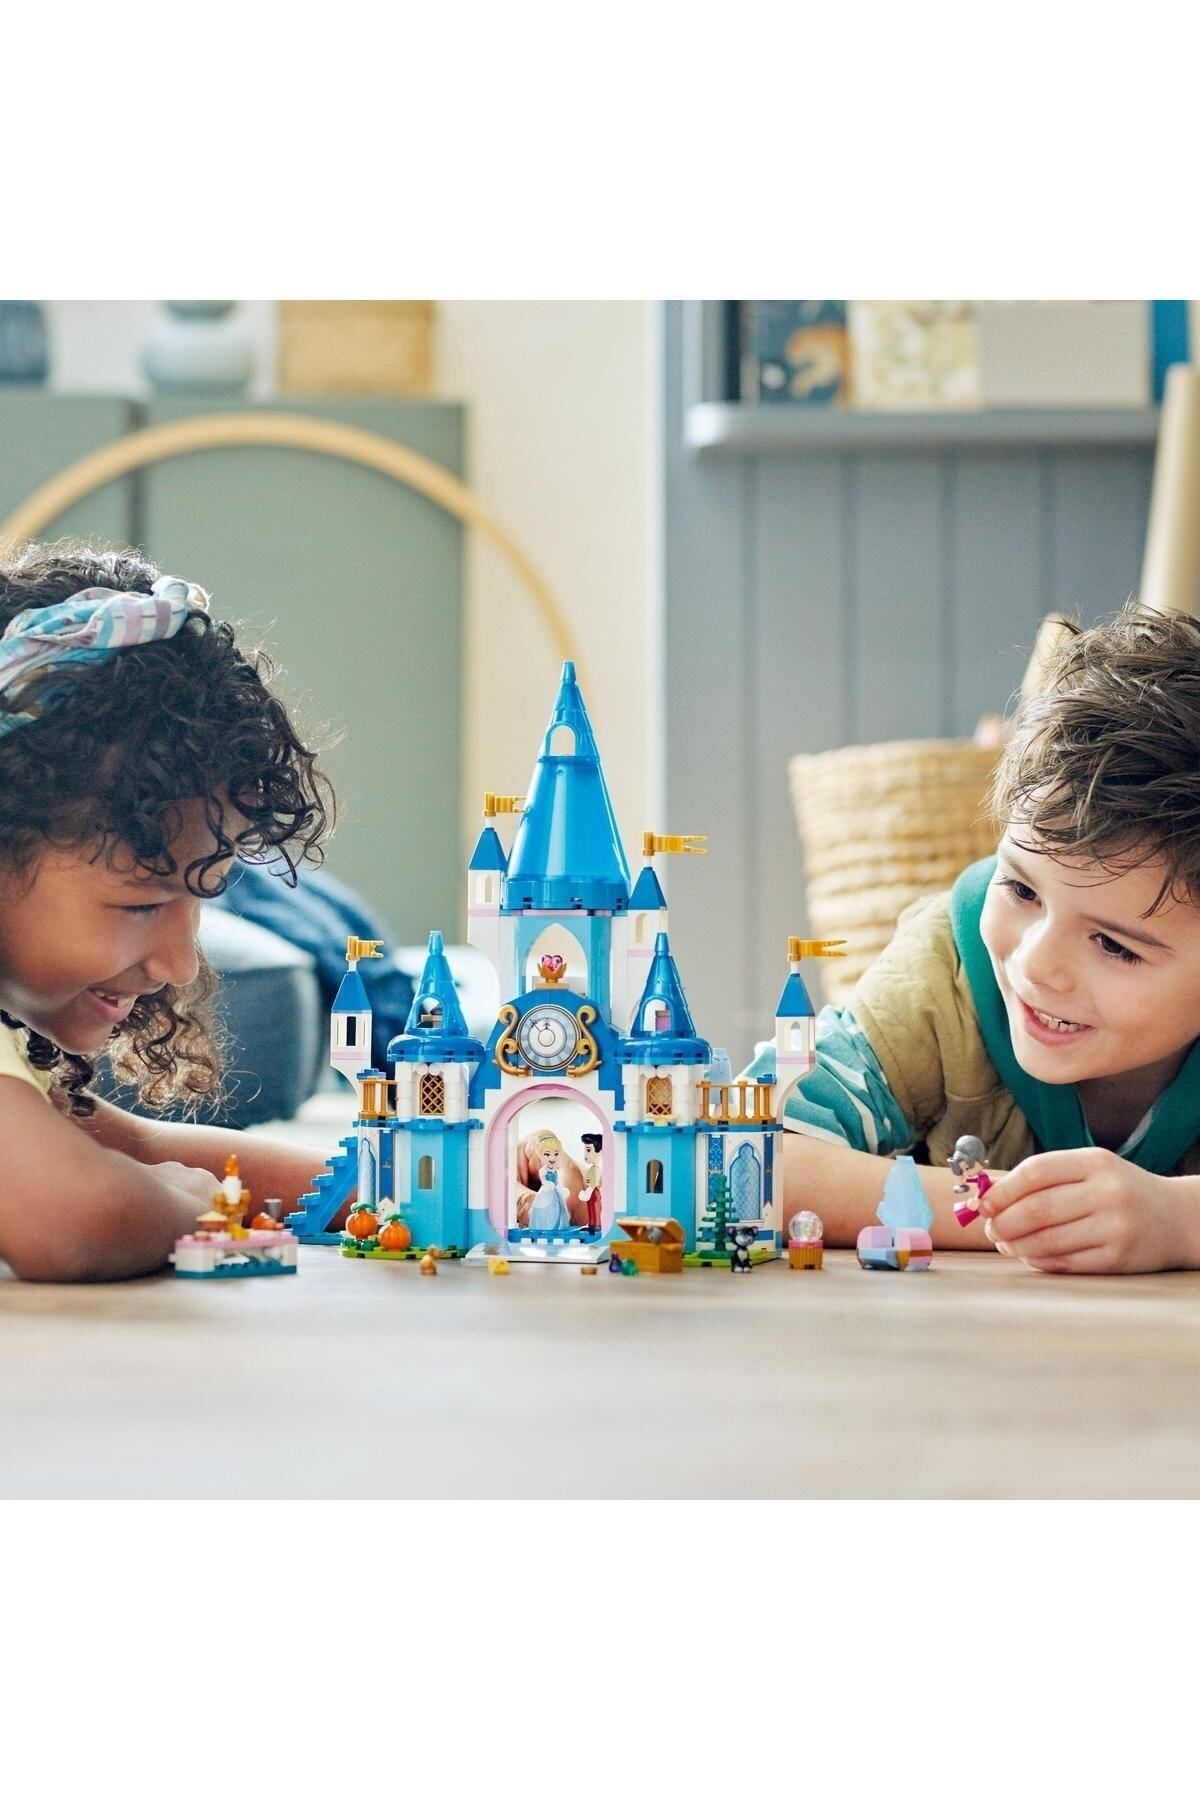 LEGO لگو | مجموعه ساخت و ساز 43206 پرنسس سیندرلا و قلعه شاهزاده خوش تیپ دیزنی (365 قطعه)